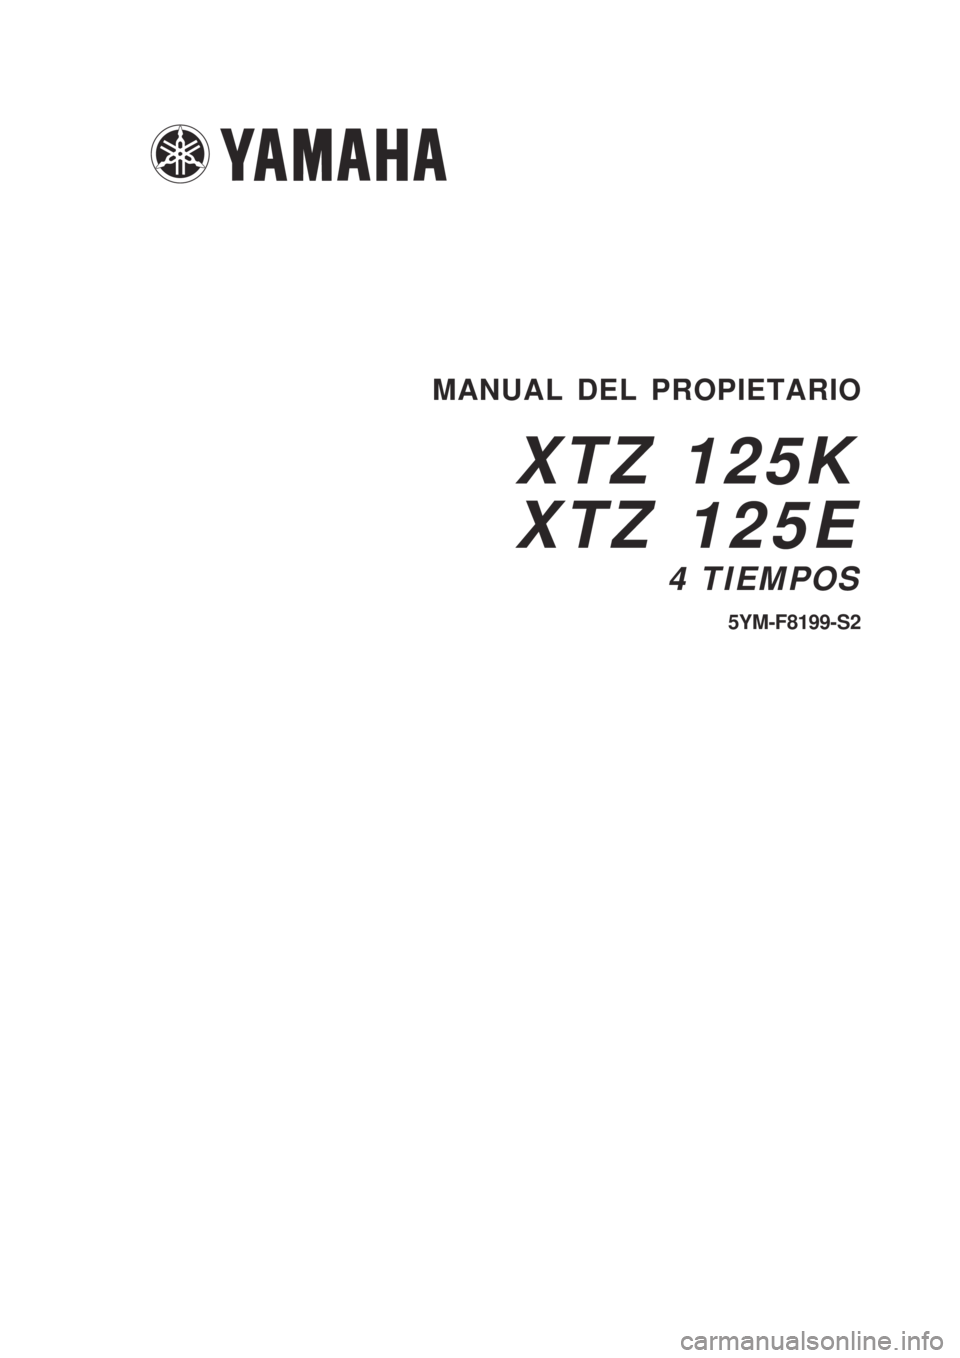 YAMAHA XTZ125 2006  Manuale de Empleo (in Spanish) I
I5YM-F8199-S2
4 TIEMPOS
MANUAL DEL PROPIETARIO
XTZ 125K
XTZ 125E
5YM-F8199-S1
4 TIEMPOS
MANUAL DEL PROPIETARIO
XTZ 125K
XTZ 125E 